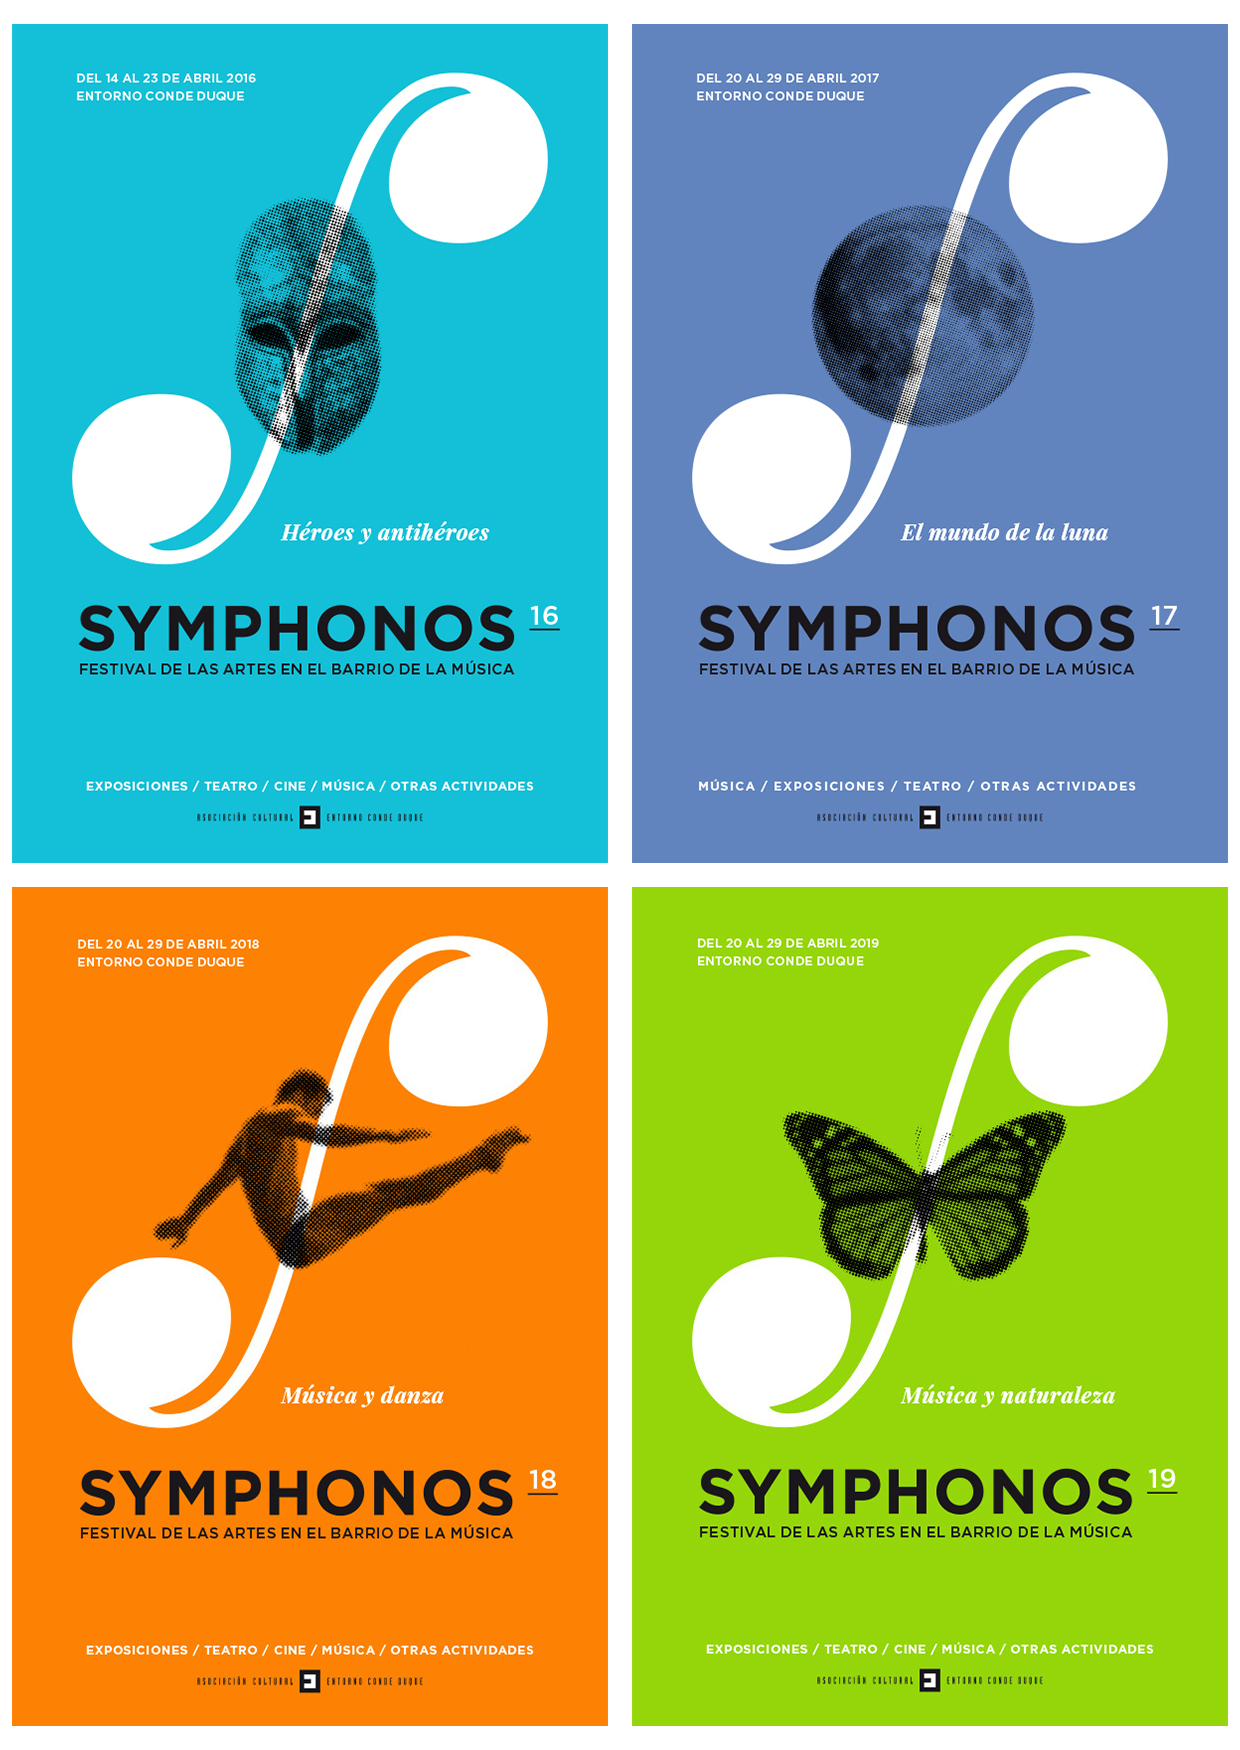 Symphonos by Estudio Pep Carrió - Creative Work